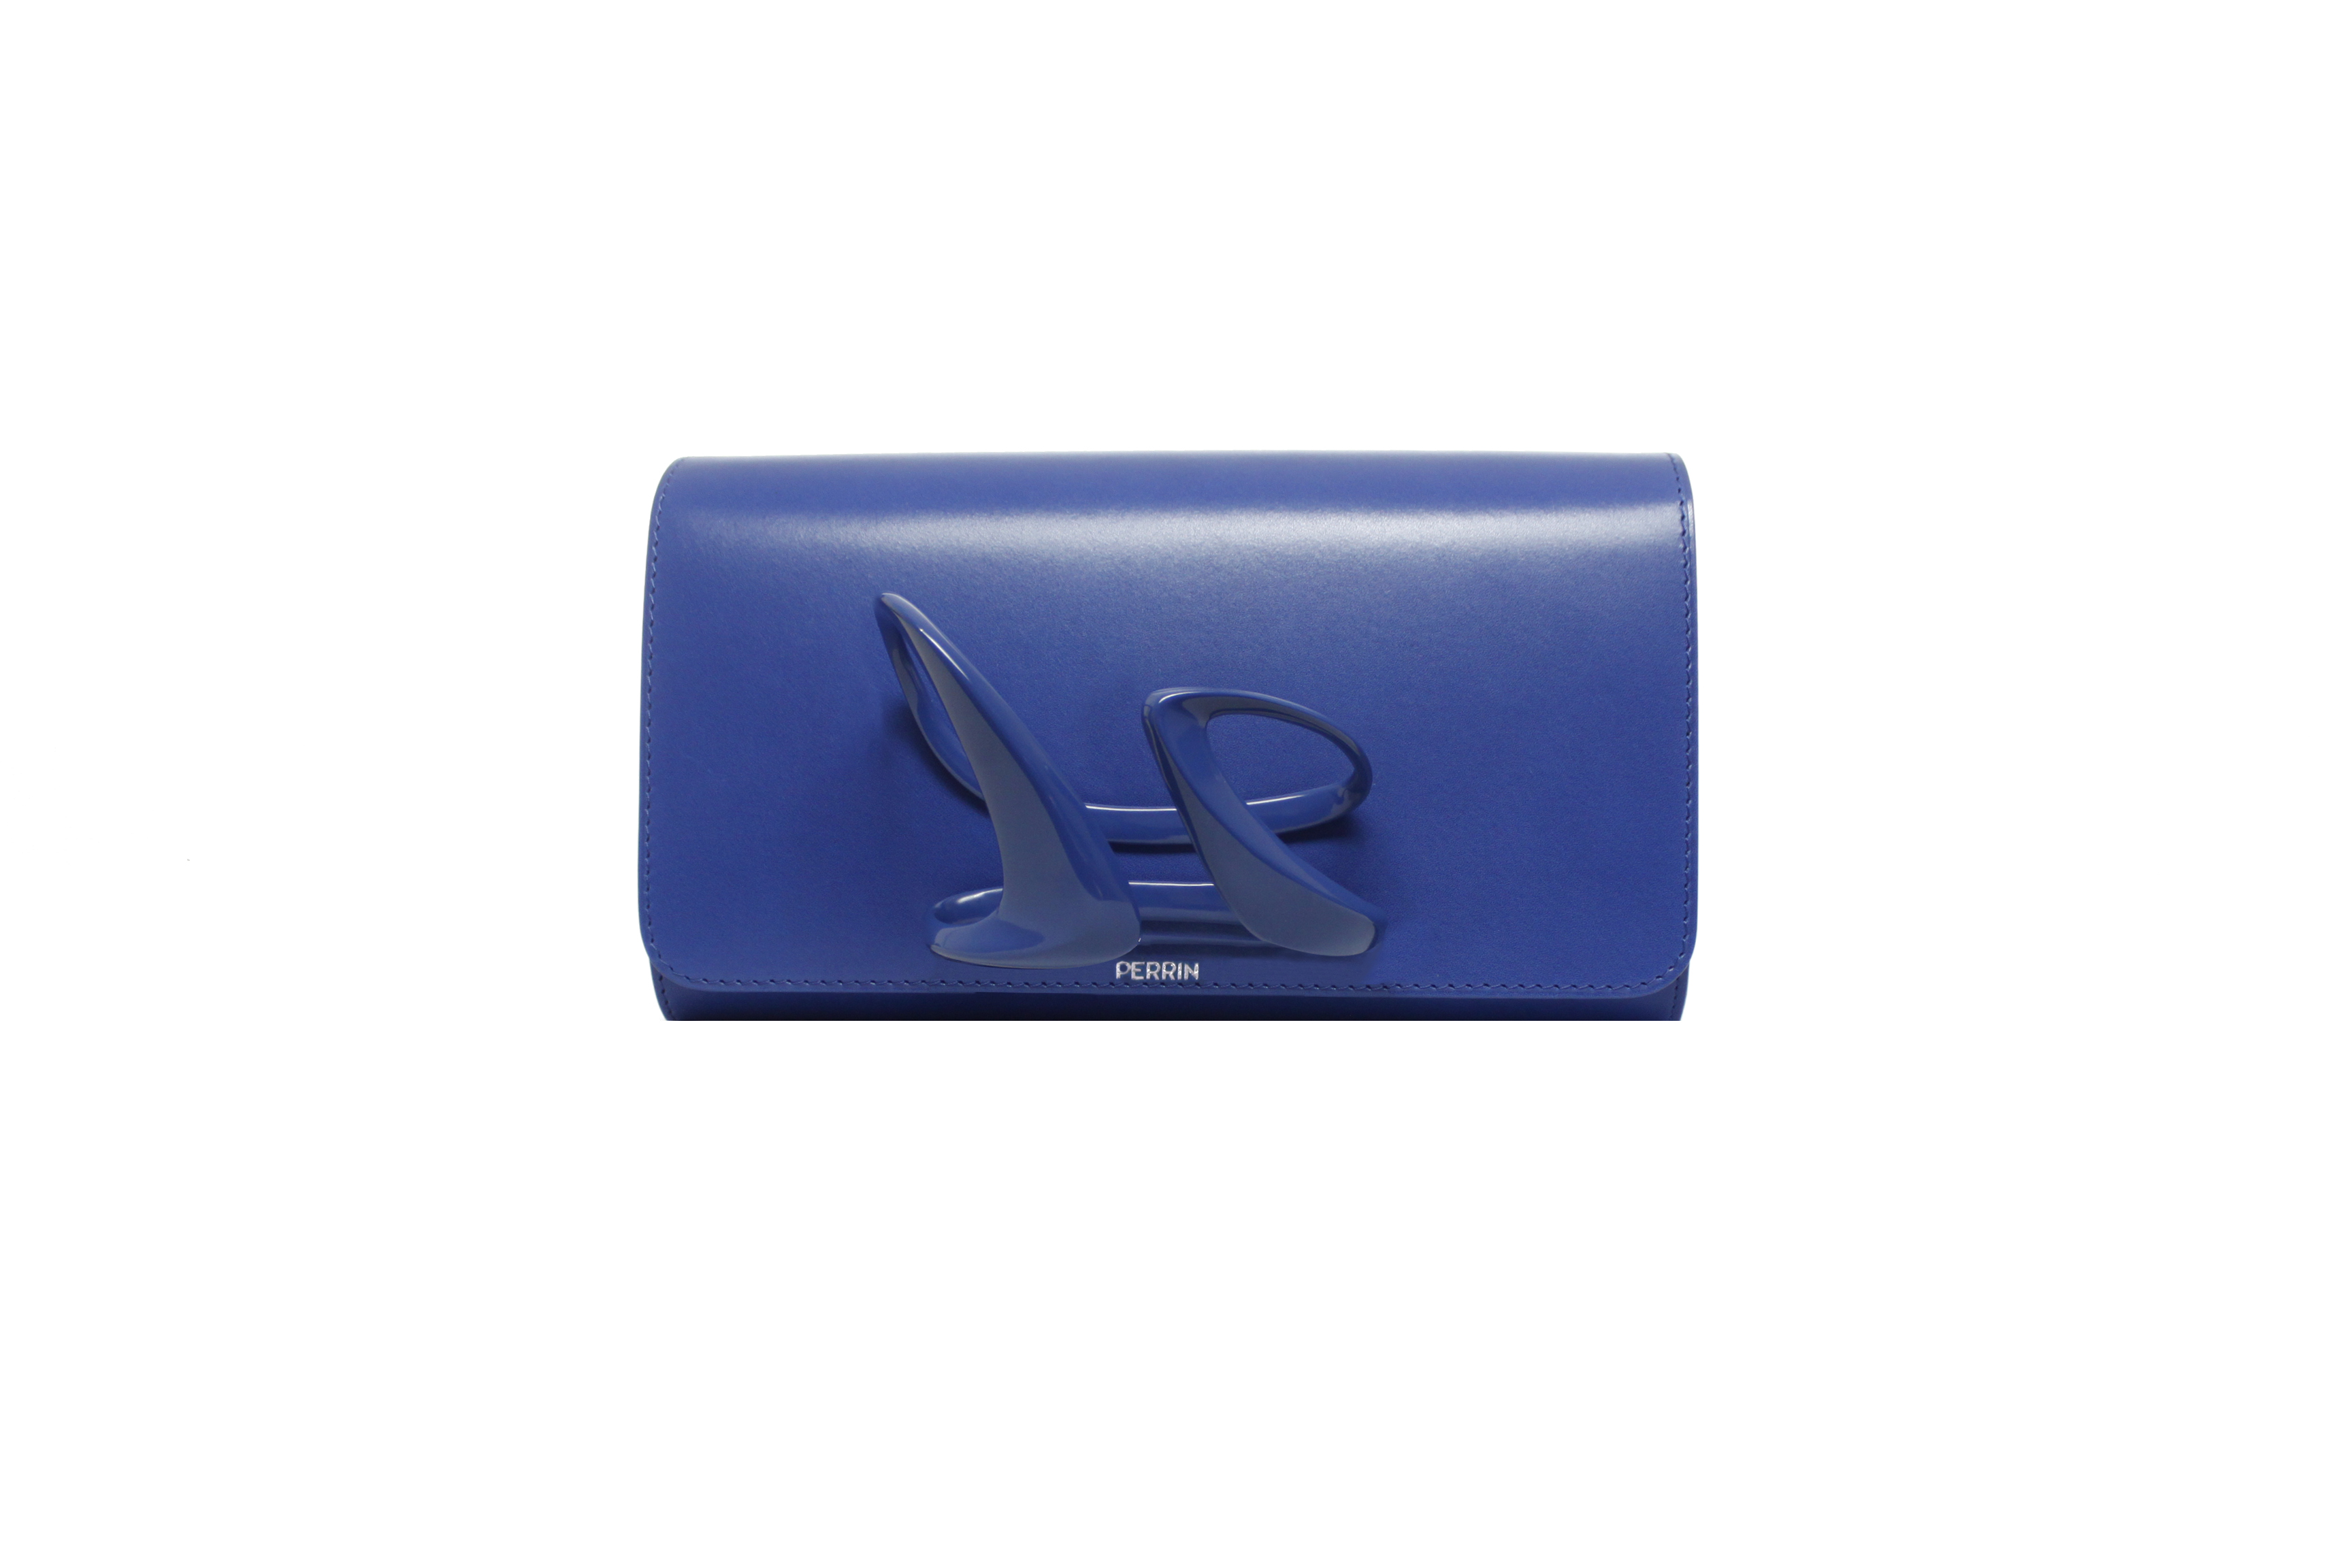 Perrin Paris x Zaha Hadid Strae clutch in blue